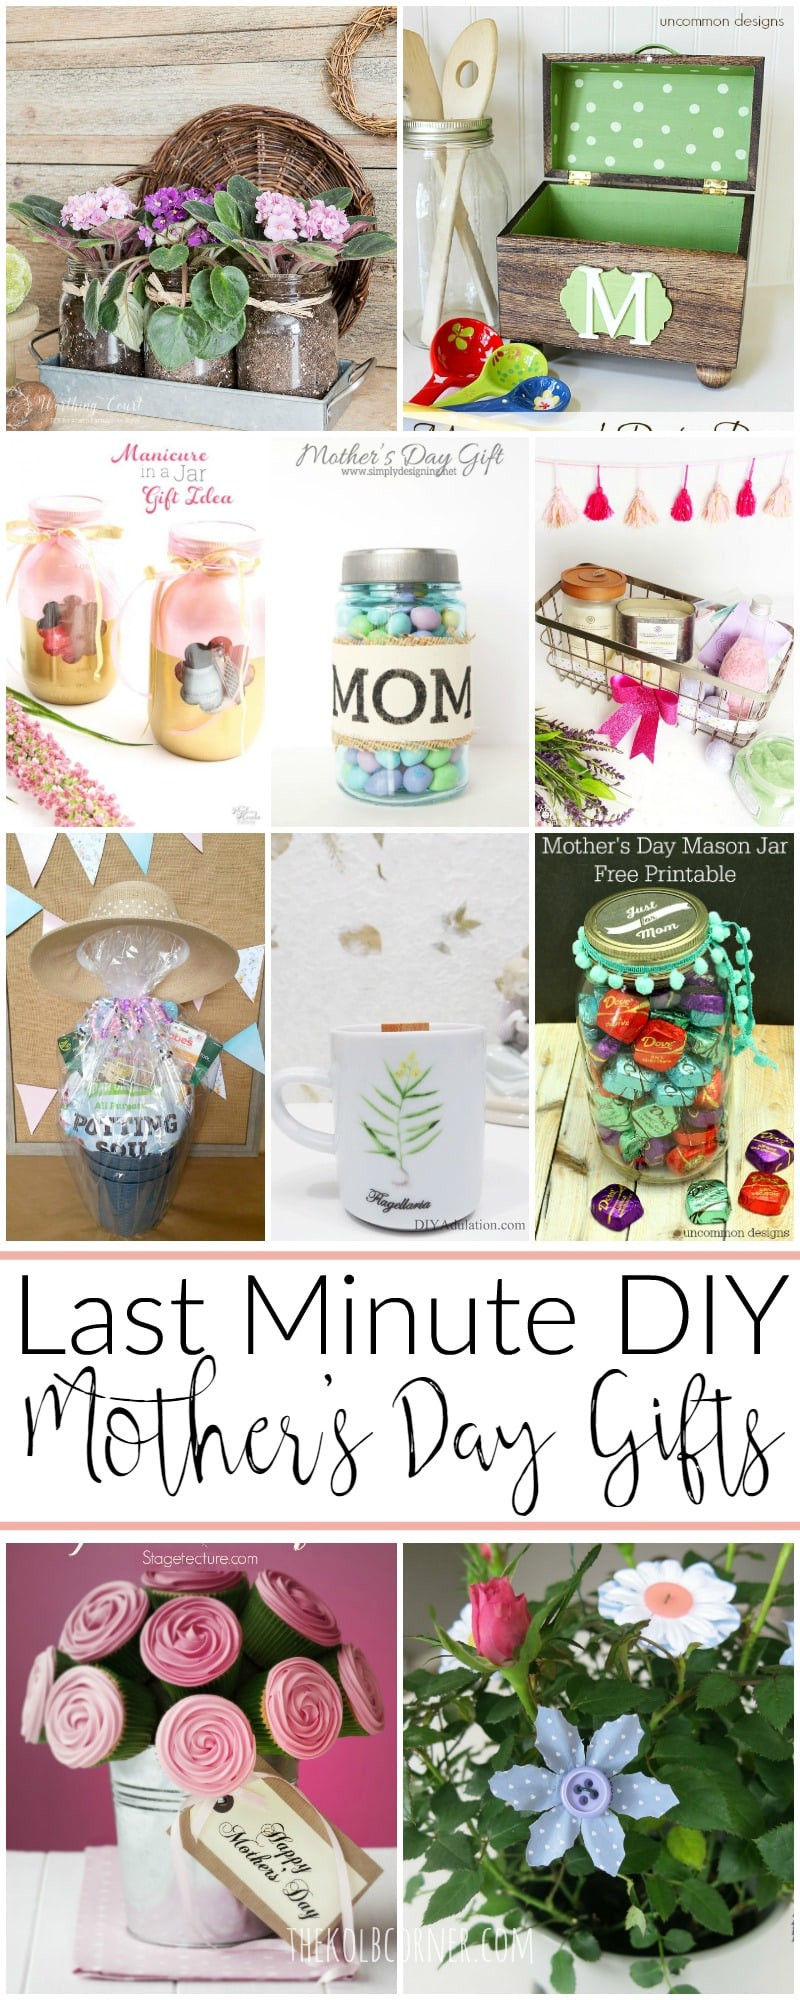 Reddit Mother'S Day Gift Ideas
 Last Minute DIY Mother s Day Gift Ideas